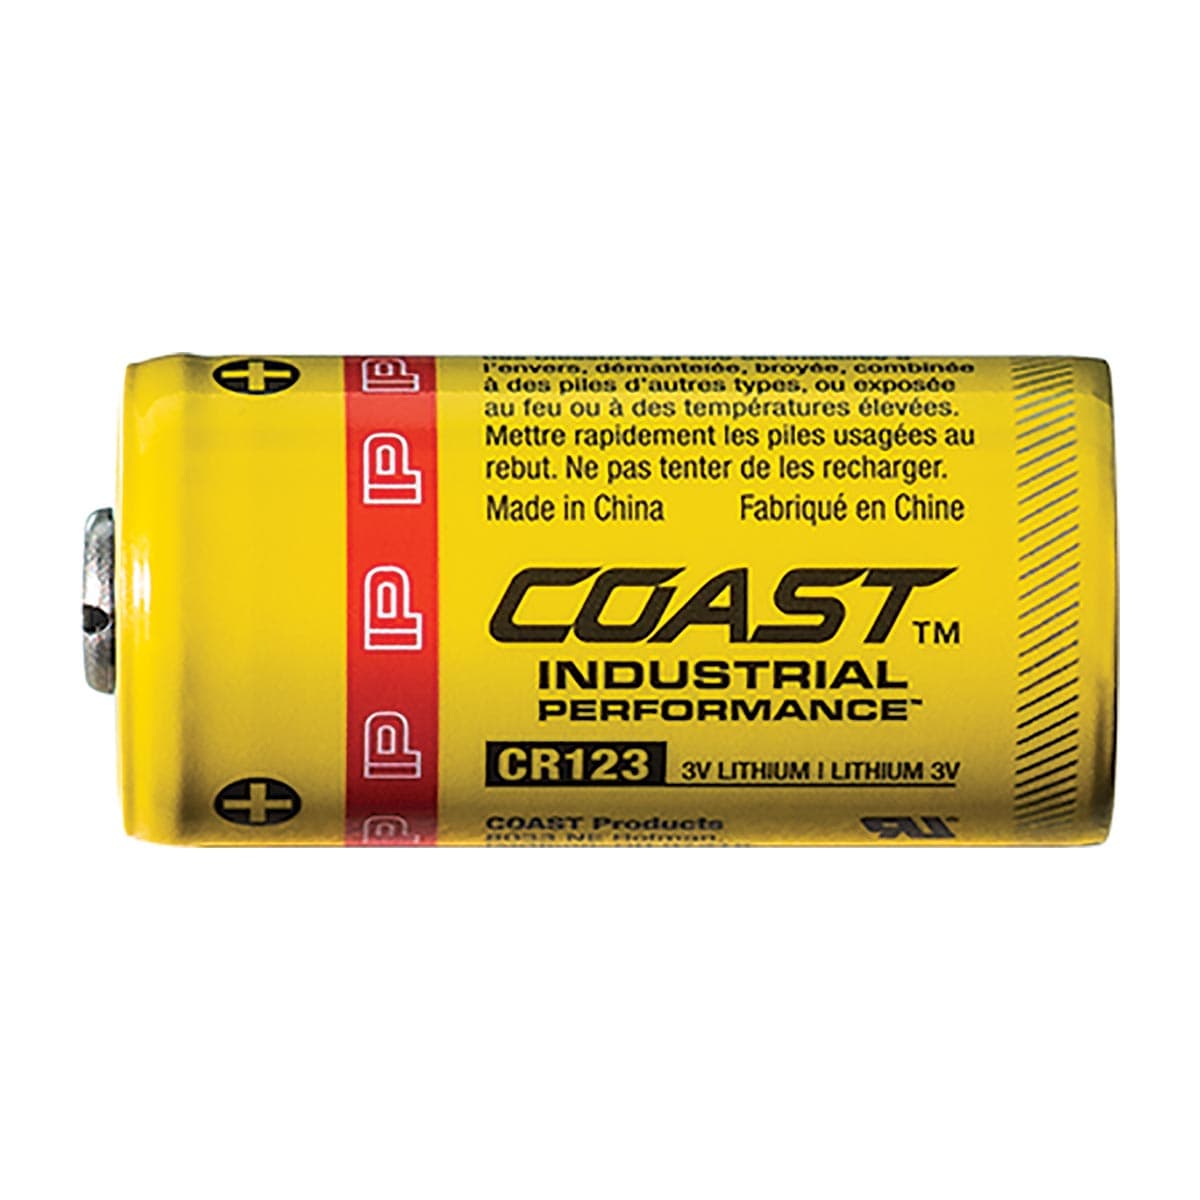 Coast Industrial Performance Lithium Batteries - CR123